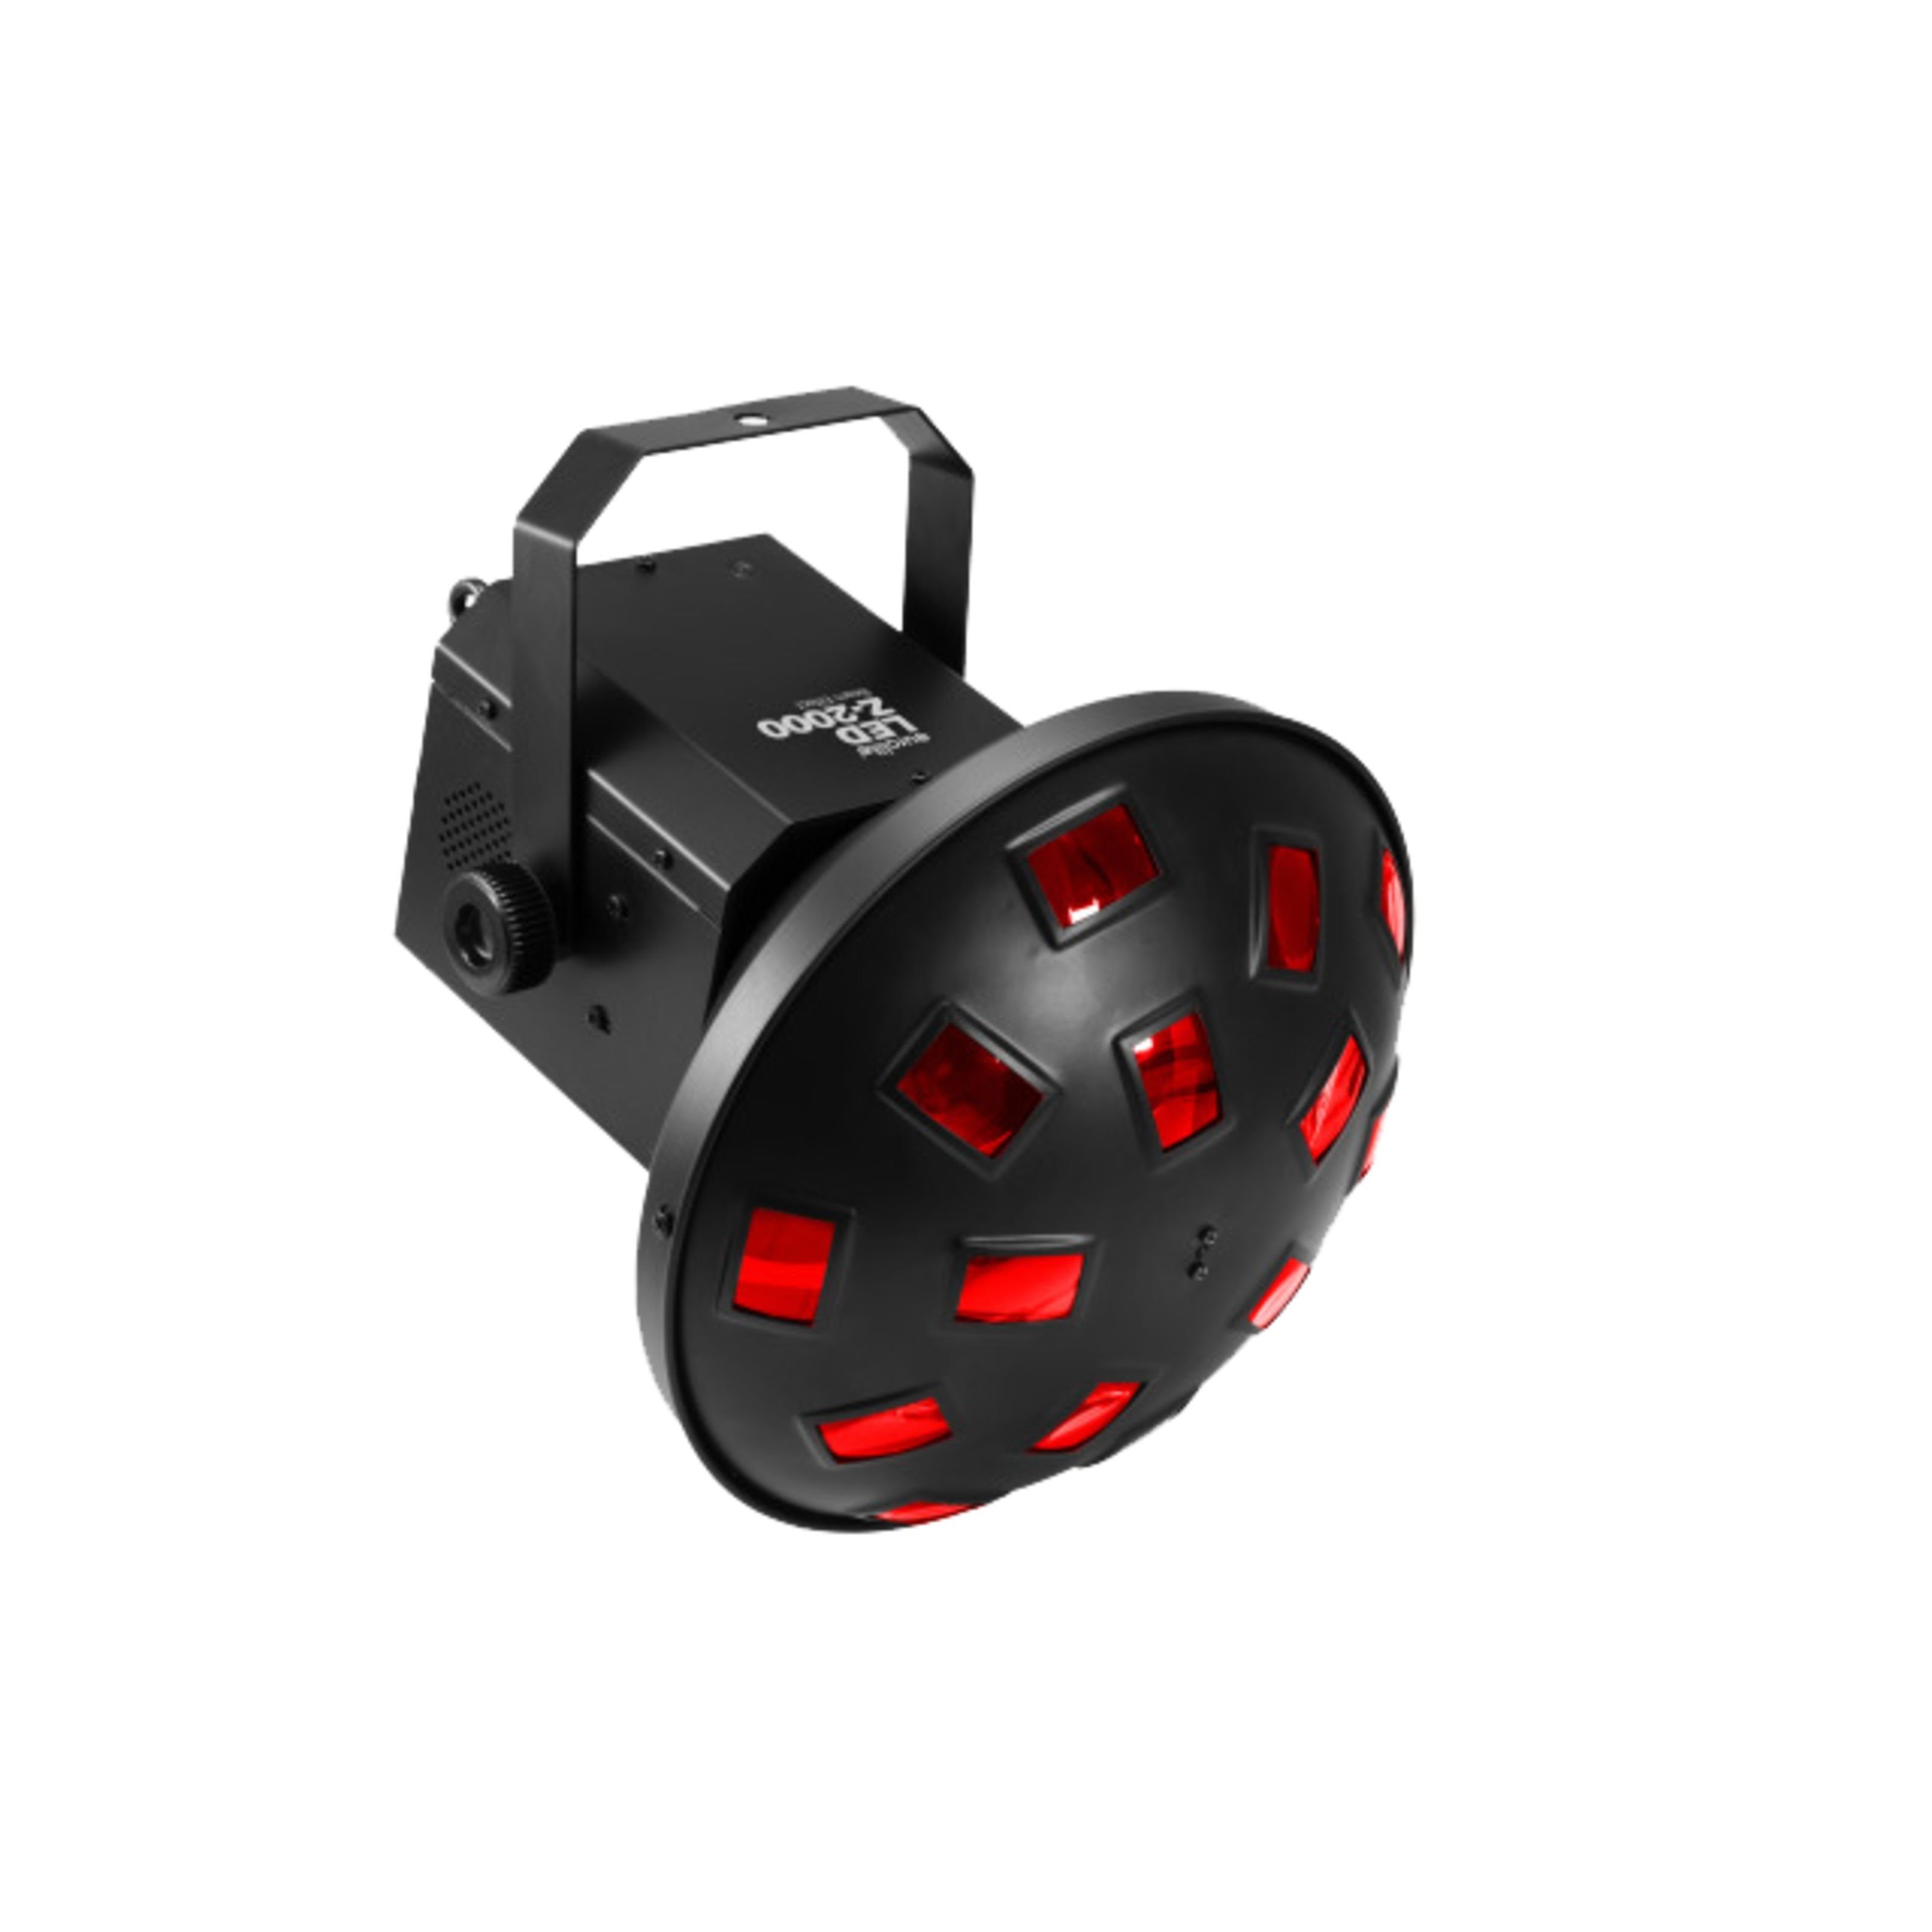 LED LED Showeffekt Discolicht, EUROLITE Strahleneffekt - Z-2000